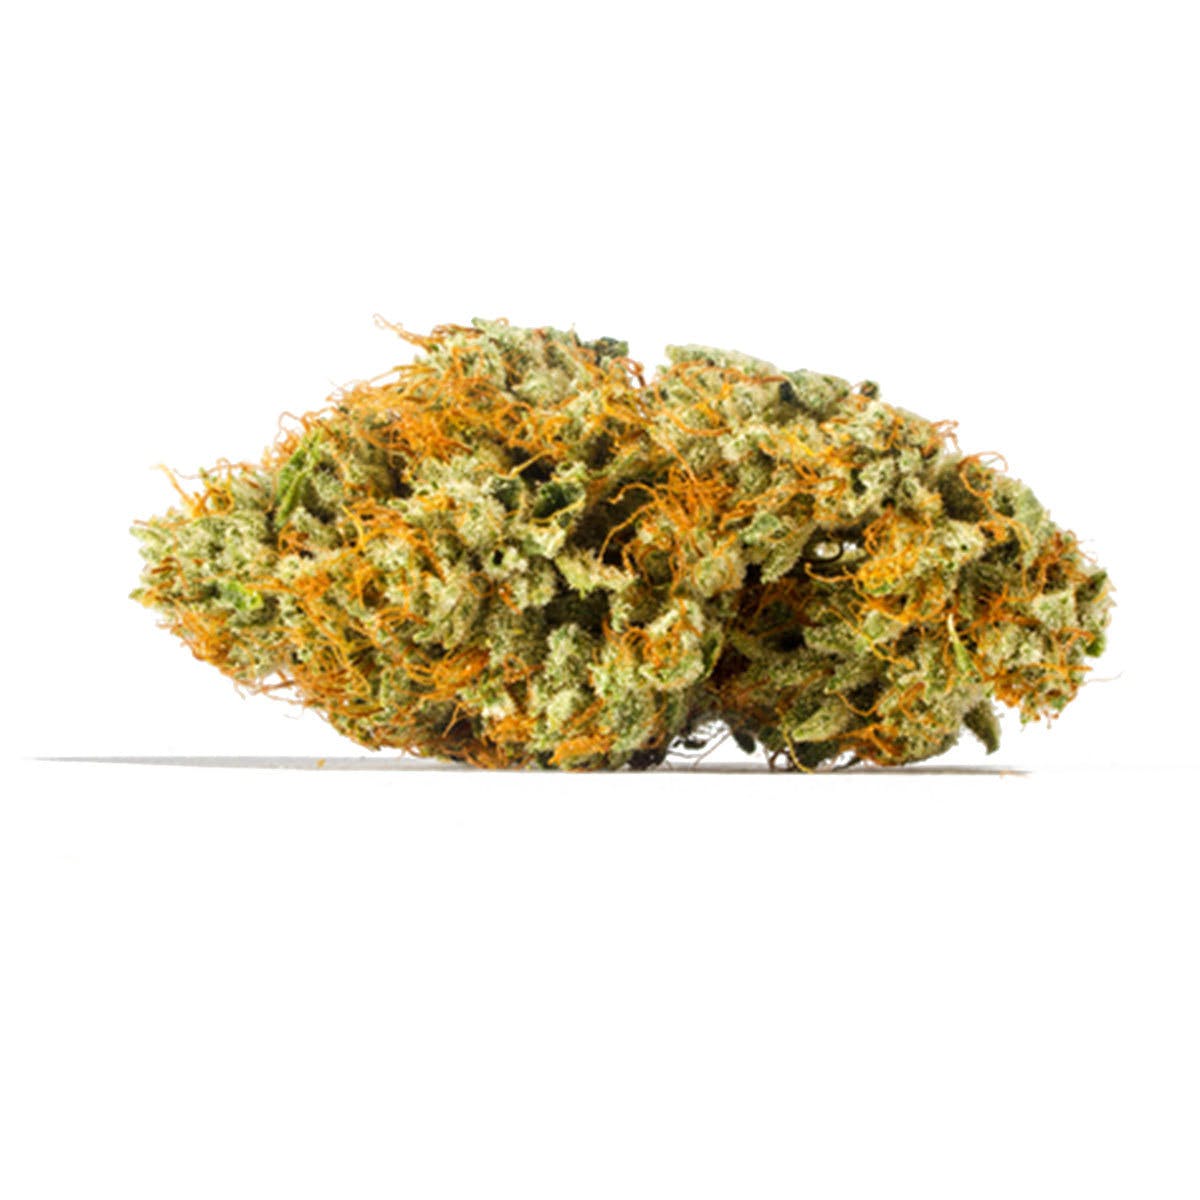 marijuana-dispensaries-strain-balboa-caregivers-adult-use-in-chatsworth-thc-design-skywalker-og